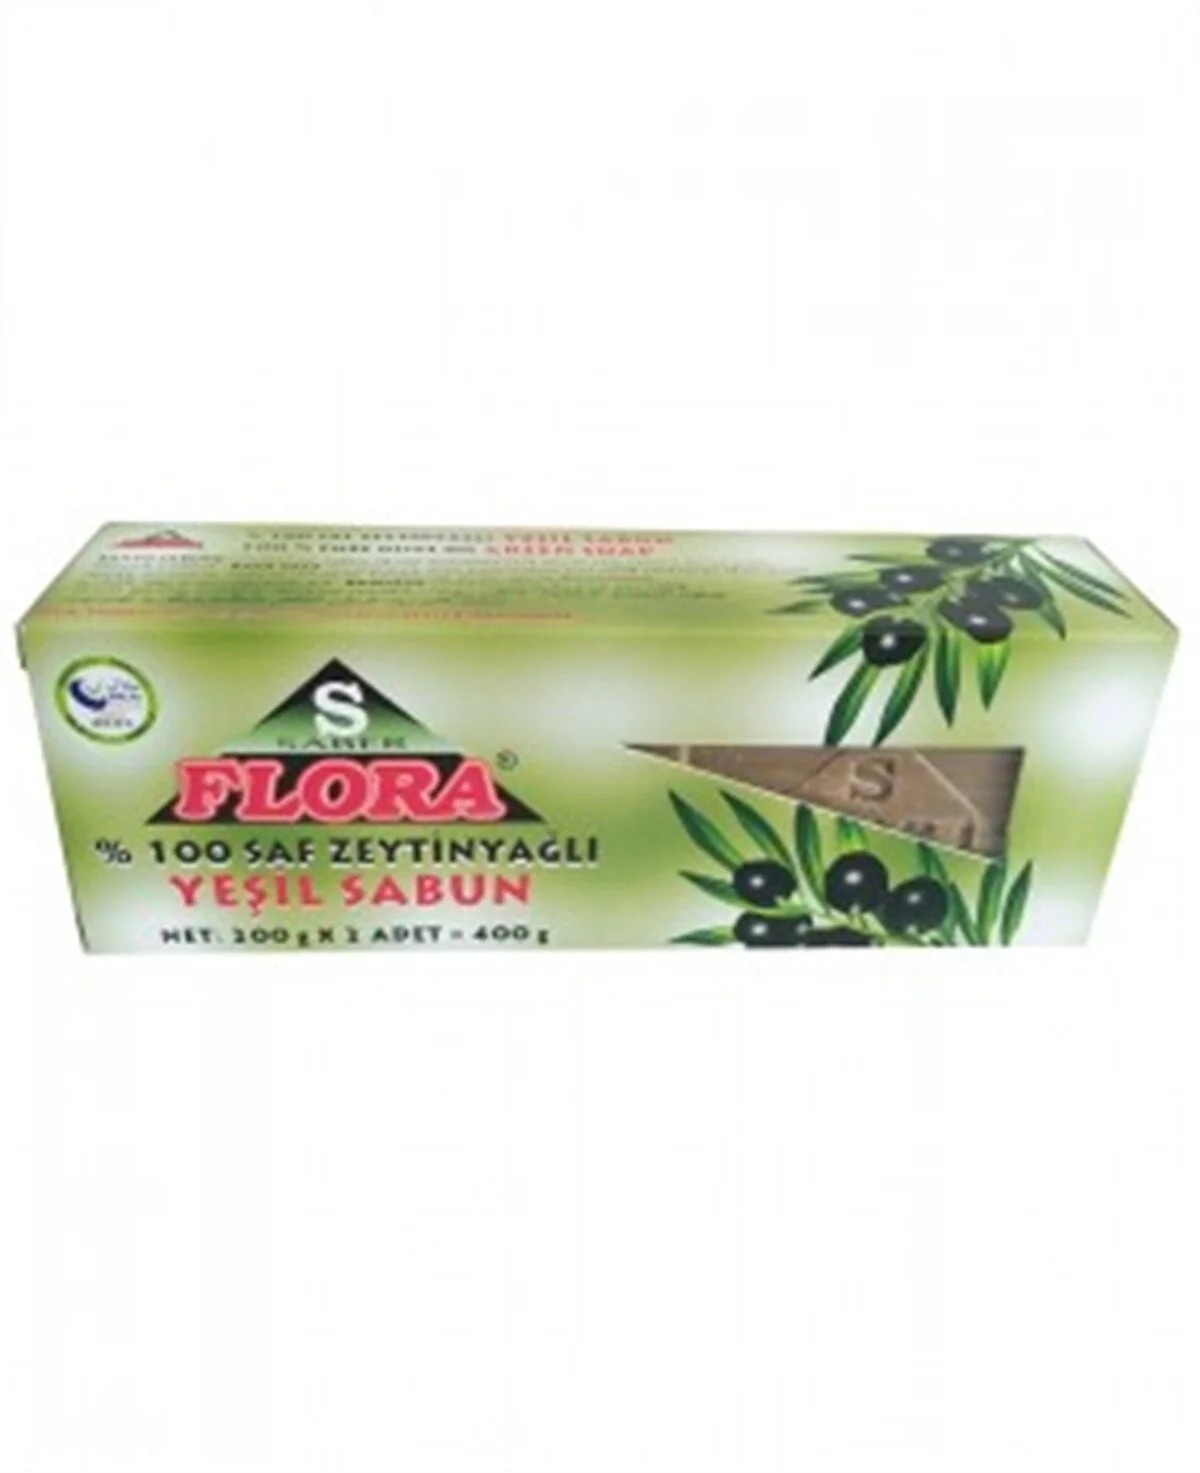 SAB - Flora %100 Zeytinyağlı Sabun 400 Gr